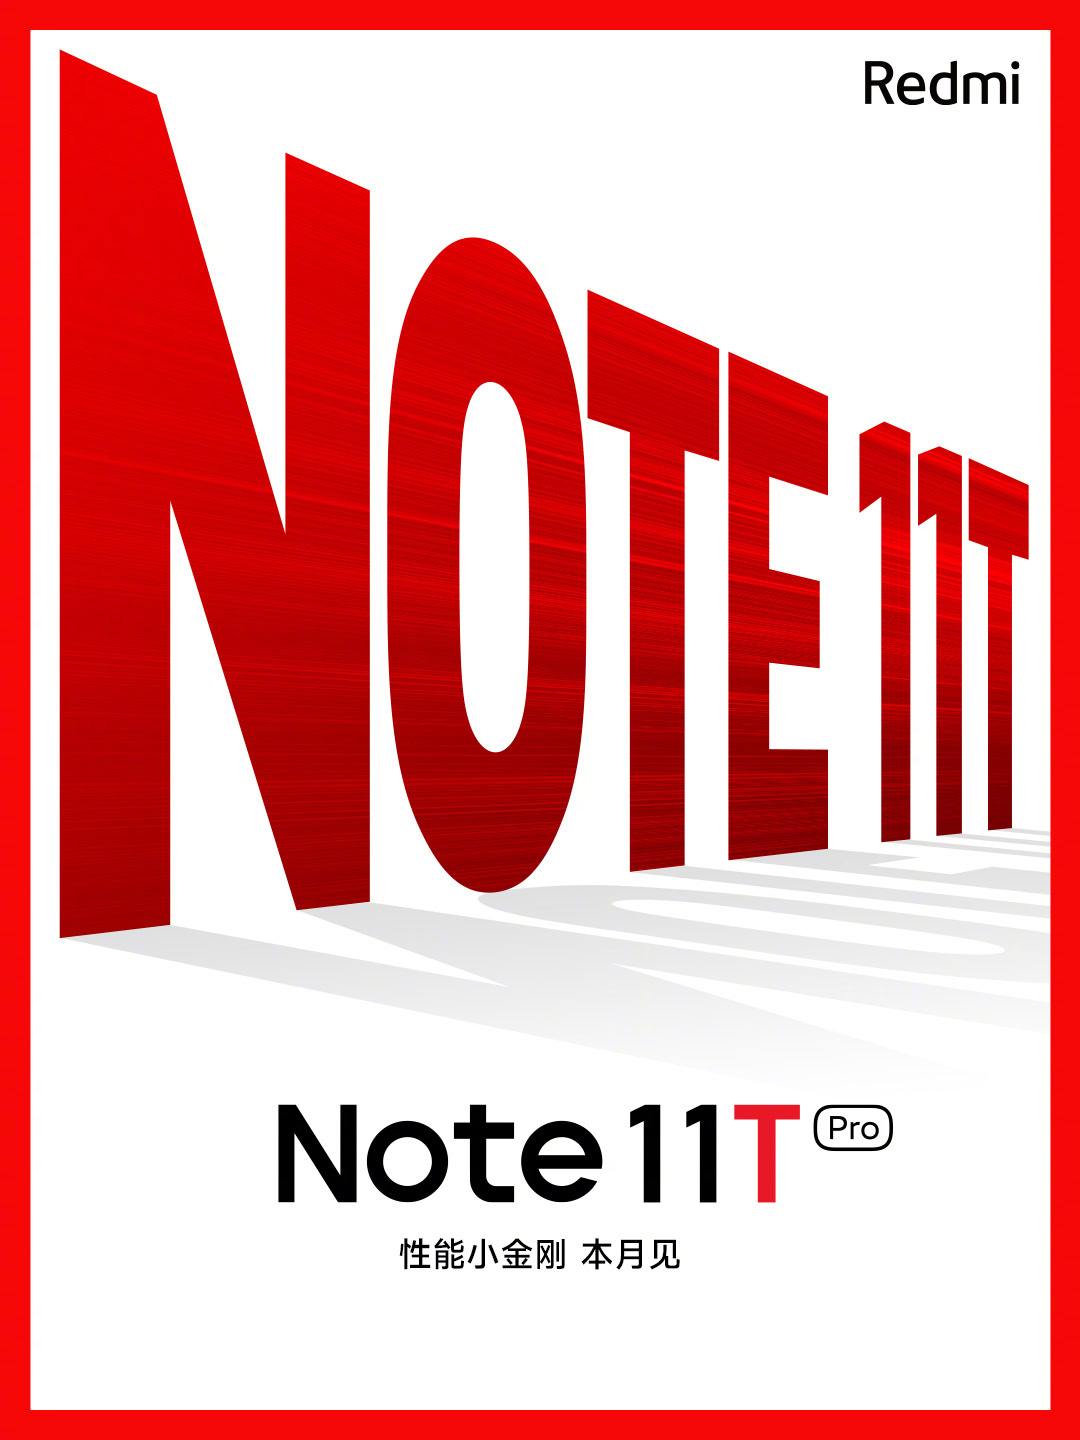 Redmi Note 11T series weibo